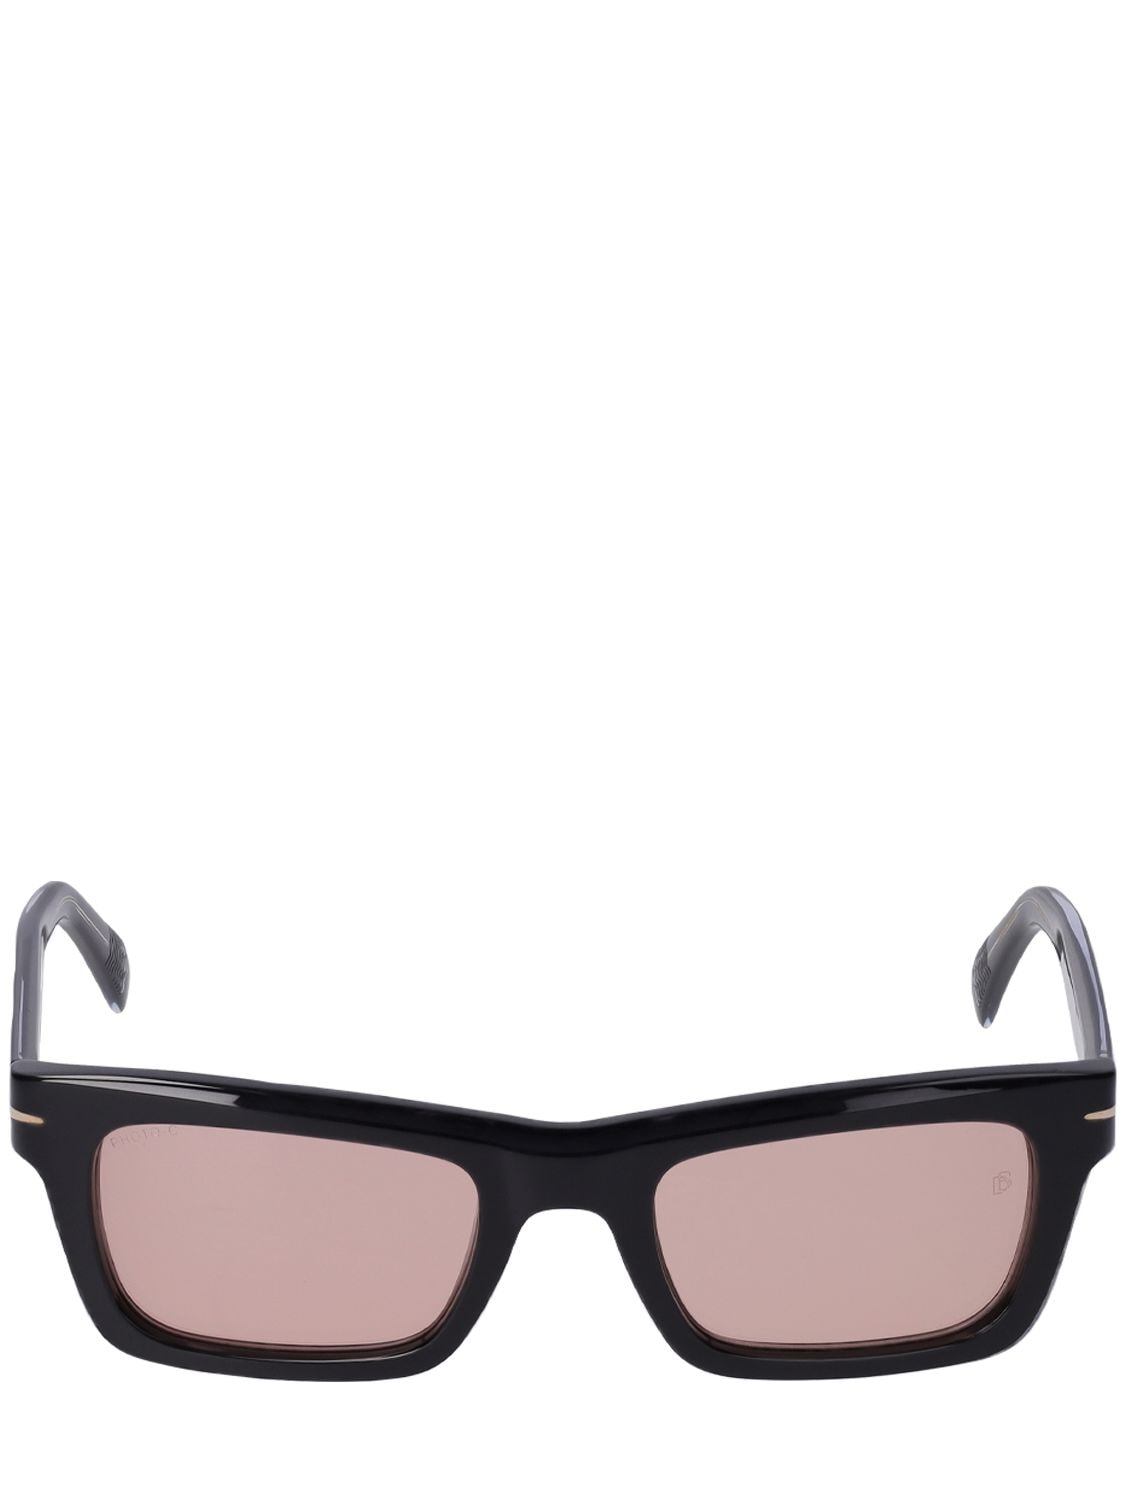 Db Eyewear By David Beckham Db Squared Acetate Sunglasses In Black,nude